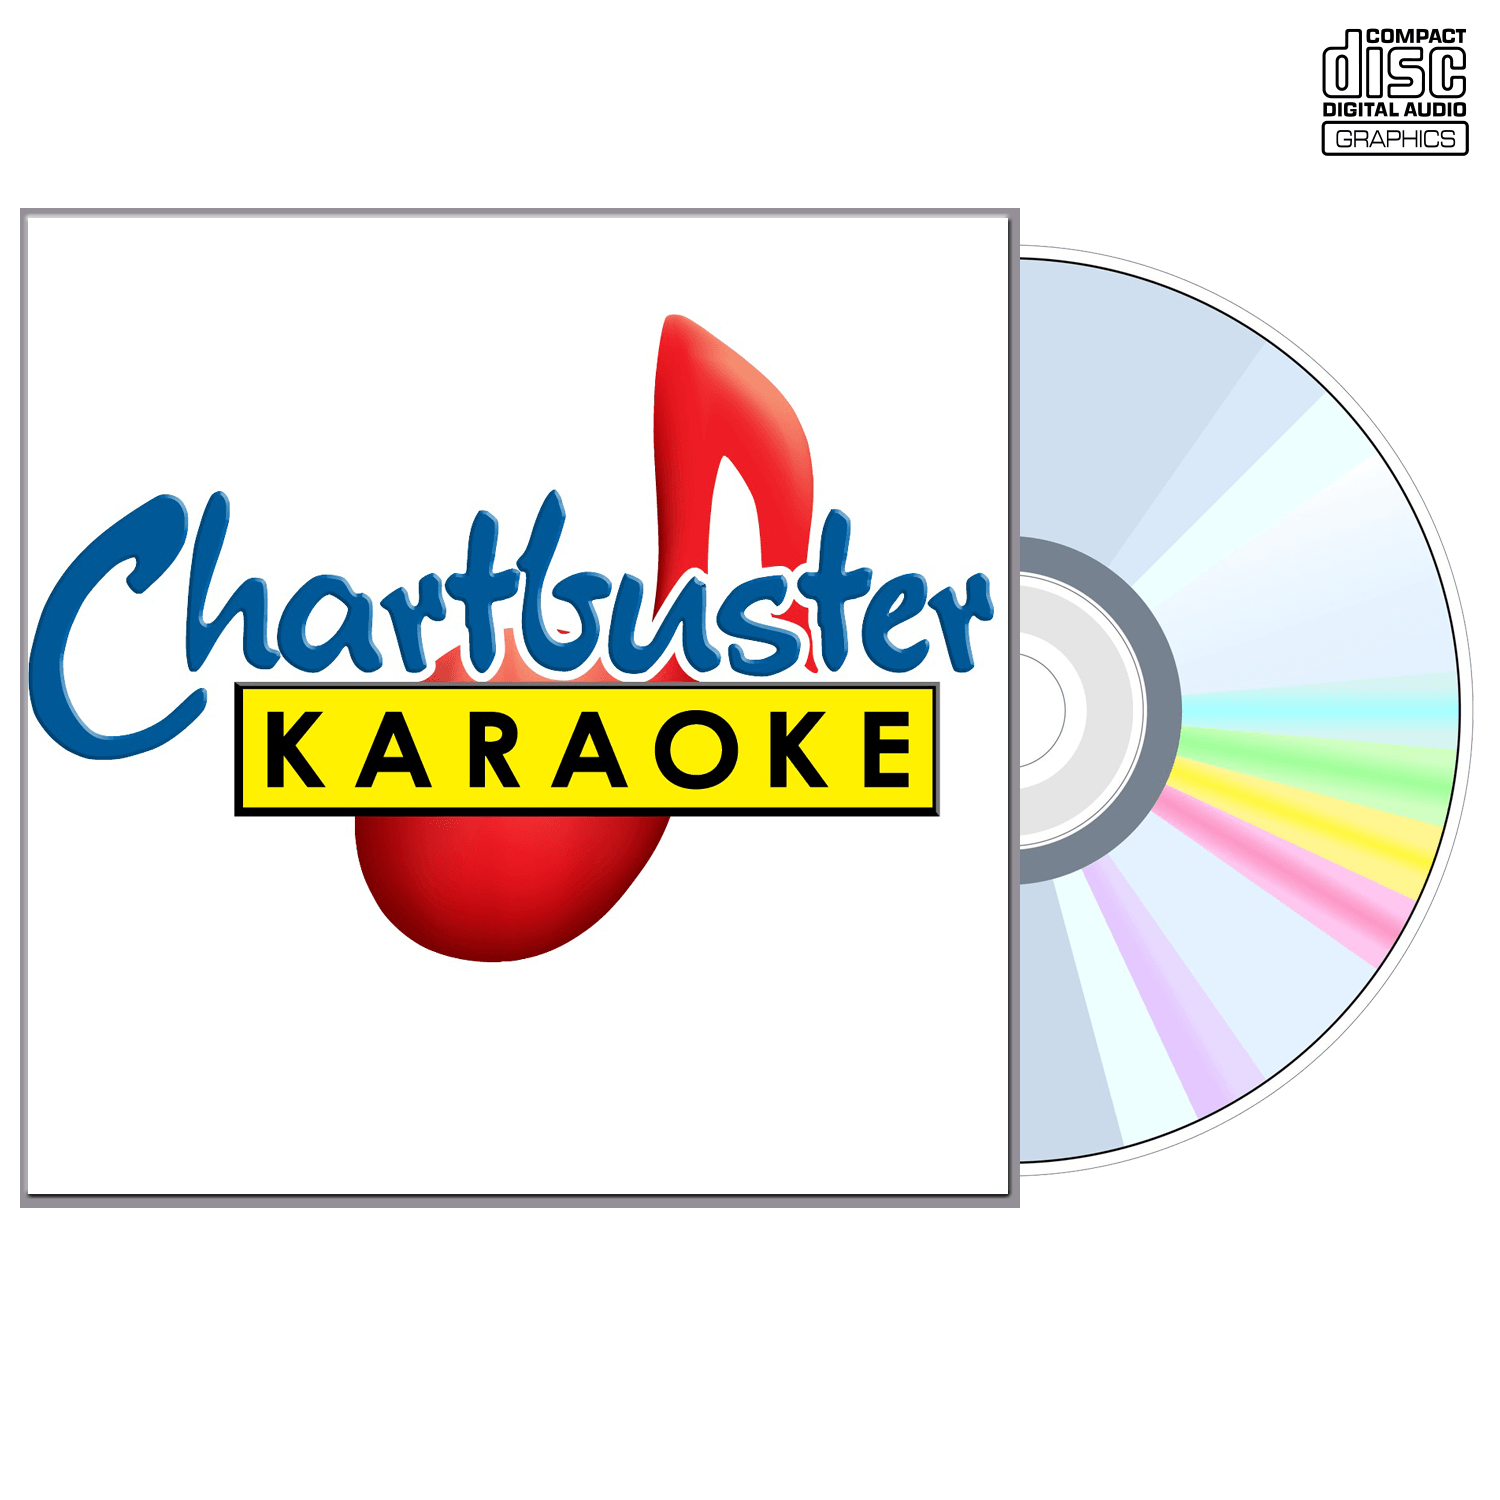 The Wilkinsons - CD+G - Chartbuster Karaoke - Karaoke Home Entertainment